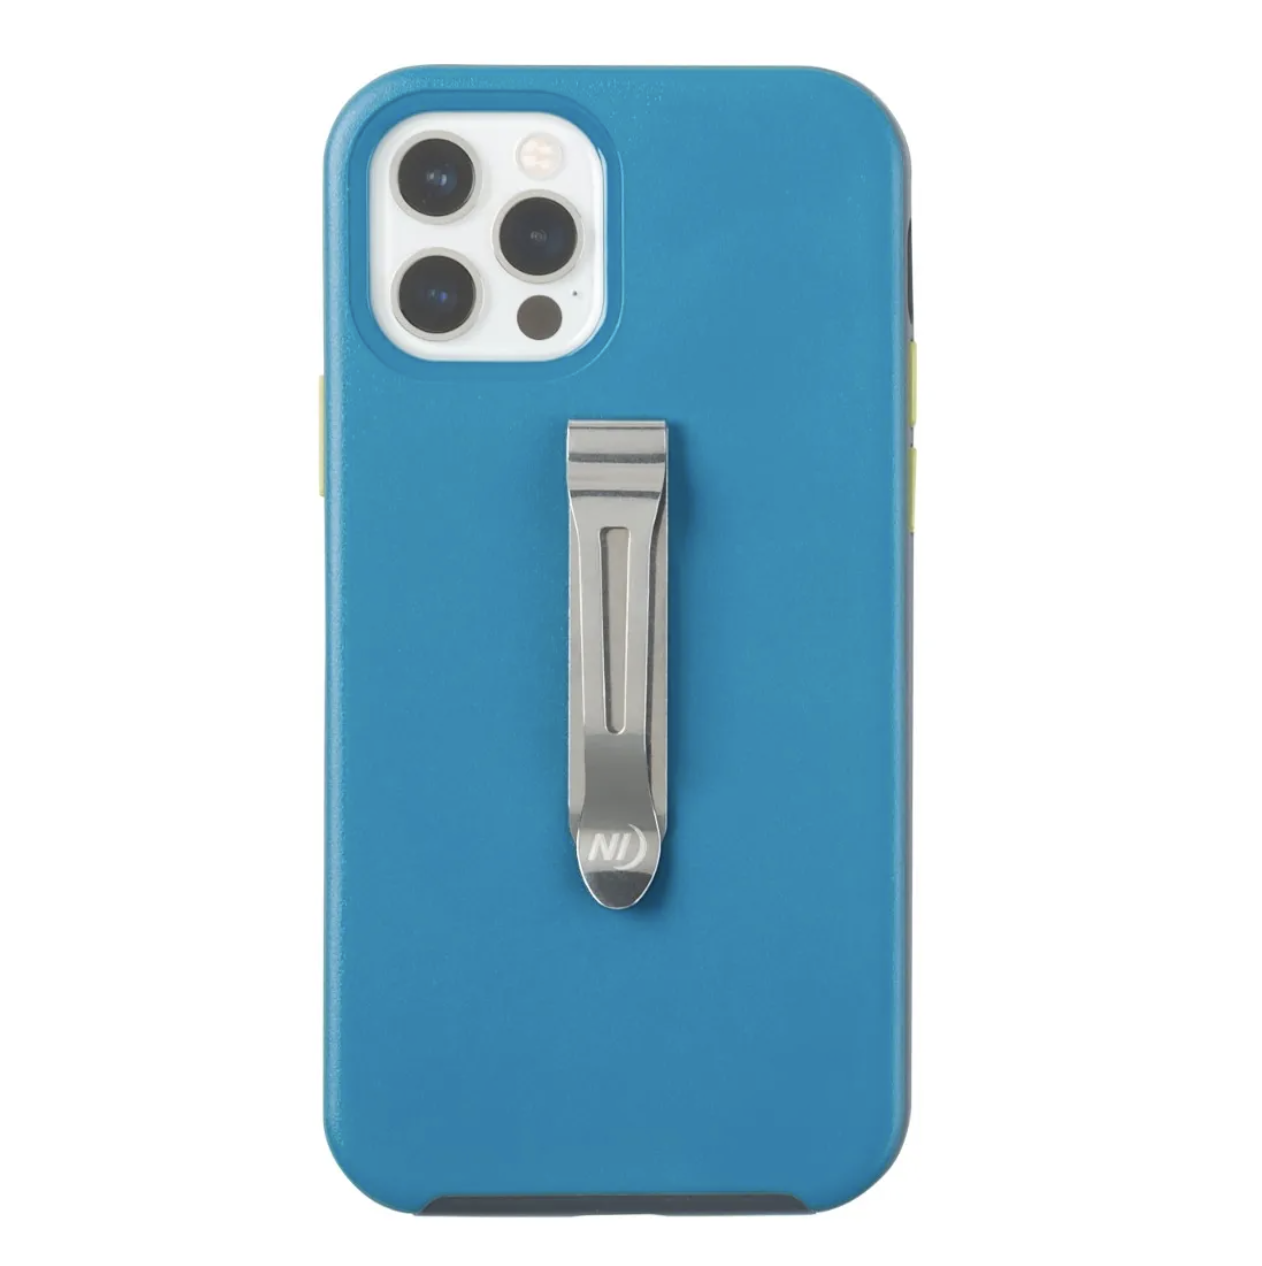 NI HipClip - Clip de poche pour appareil mobile